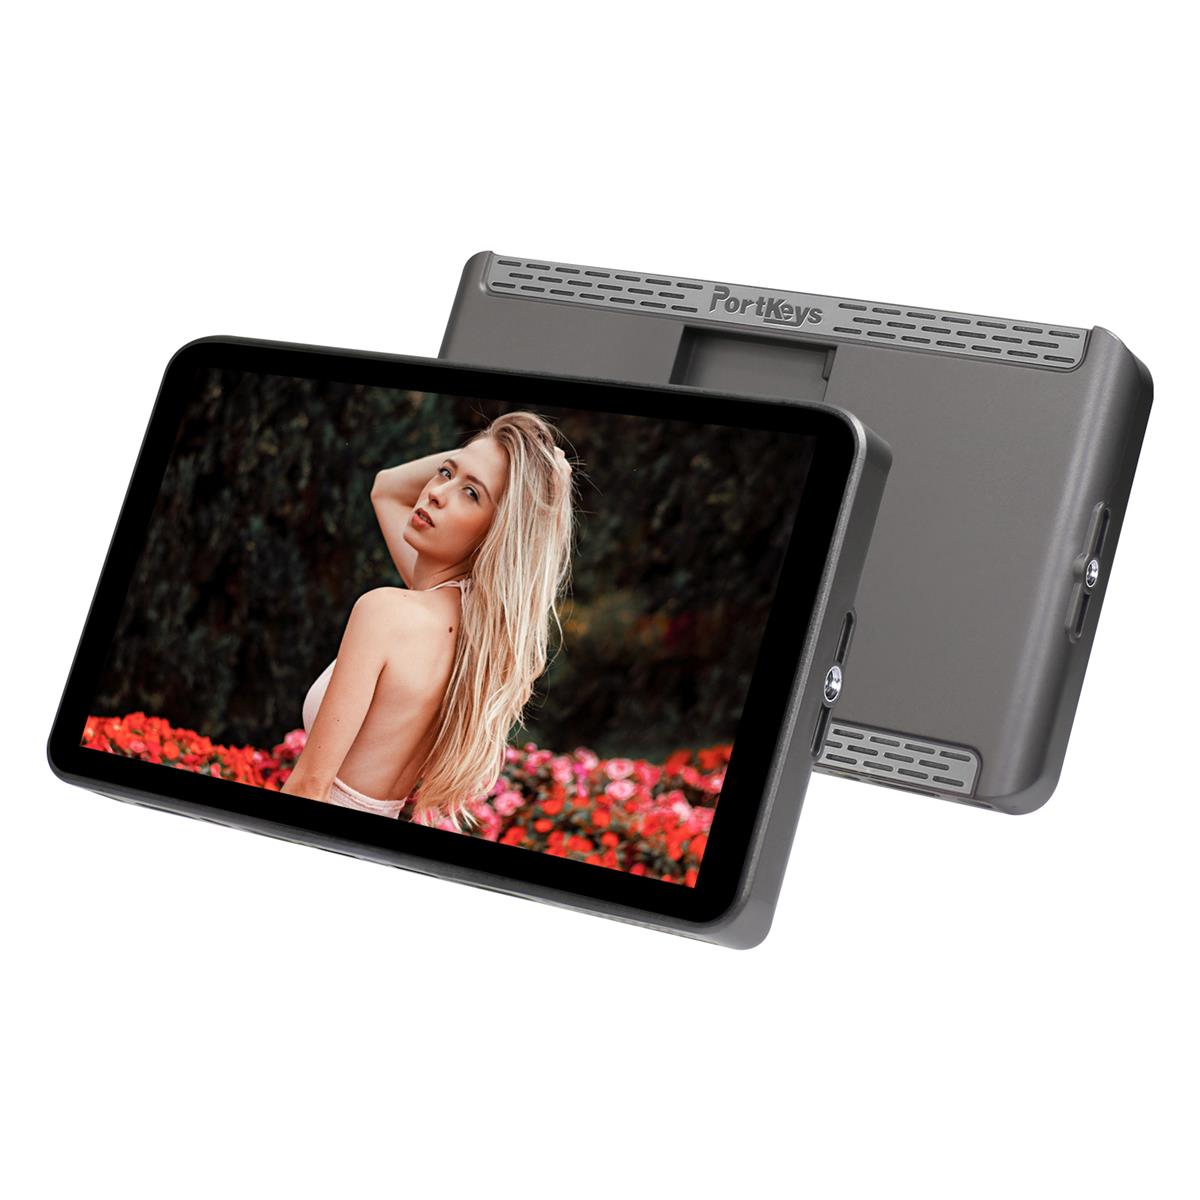 7" Full HD Touchscreen High Brightness Monitor, Supports 4K HDMI - Portkeys LH7H